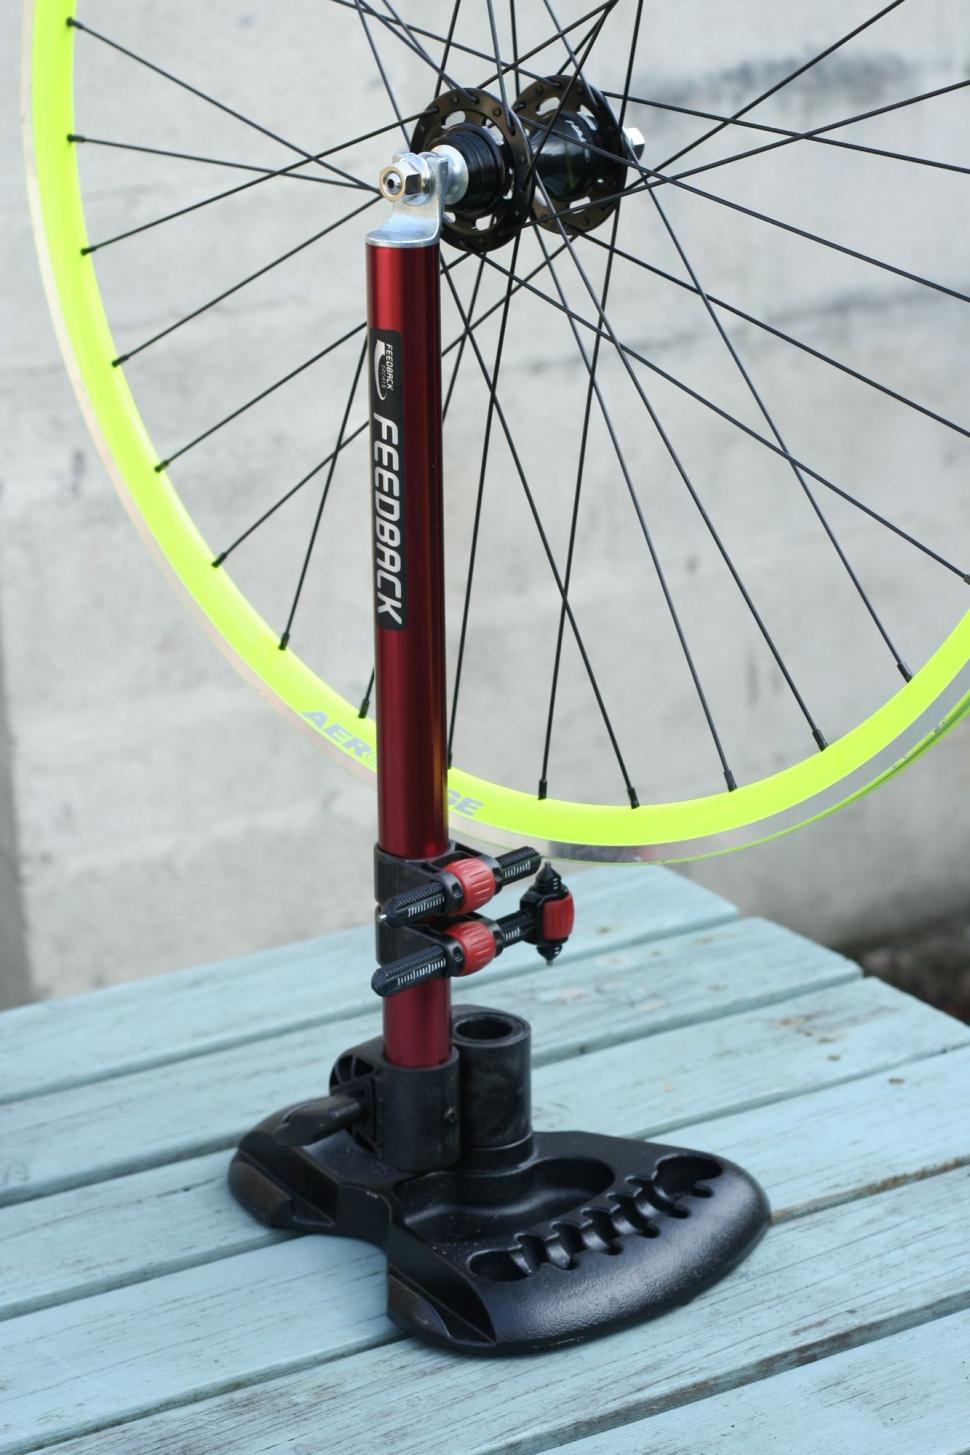 truing bike wheel at home